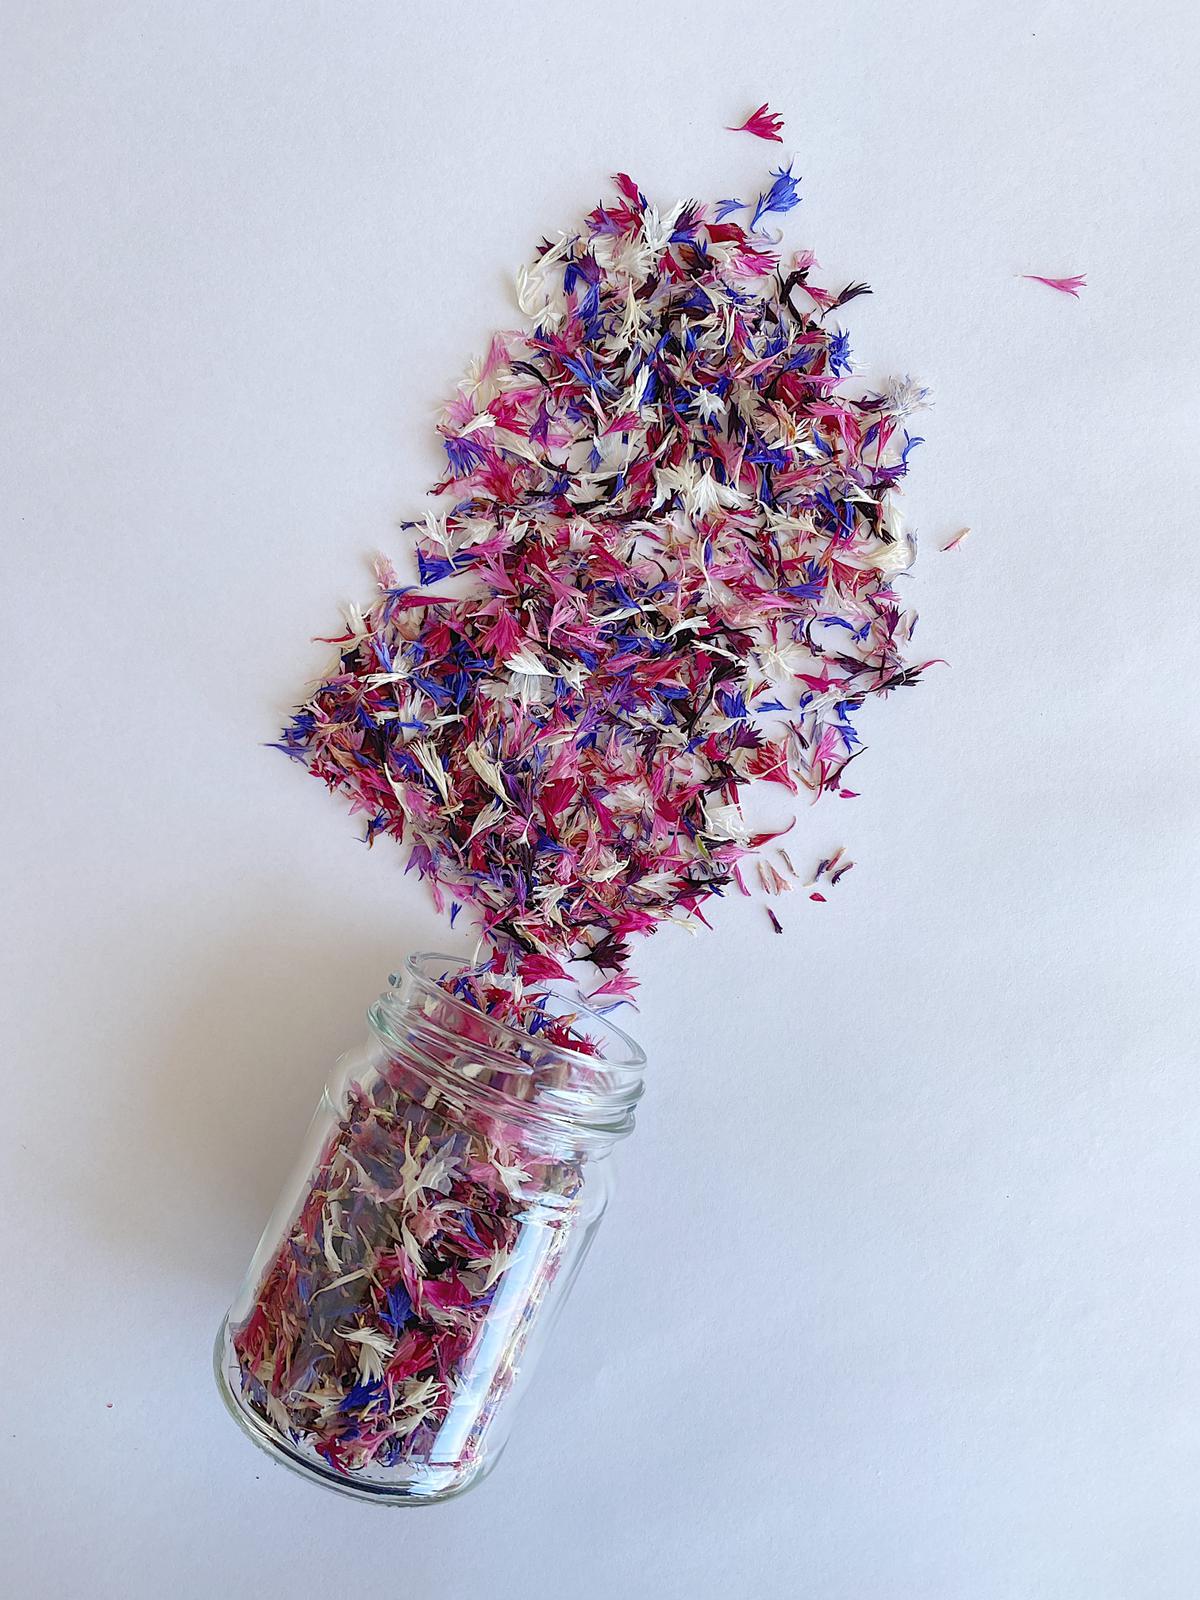 Edible Flower Sprinkles - Rose Petals Mix - The Peel Thing